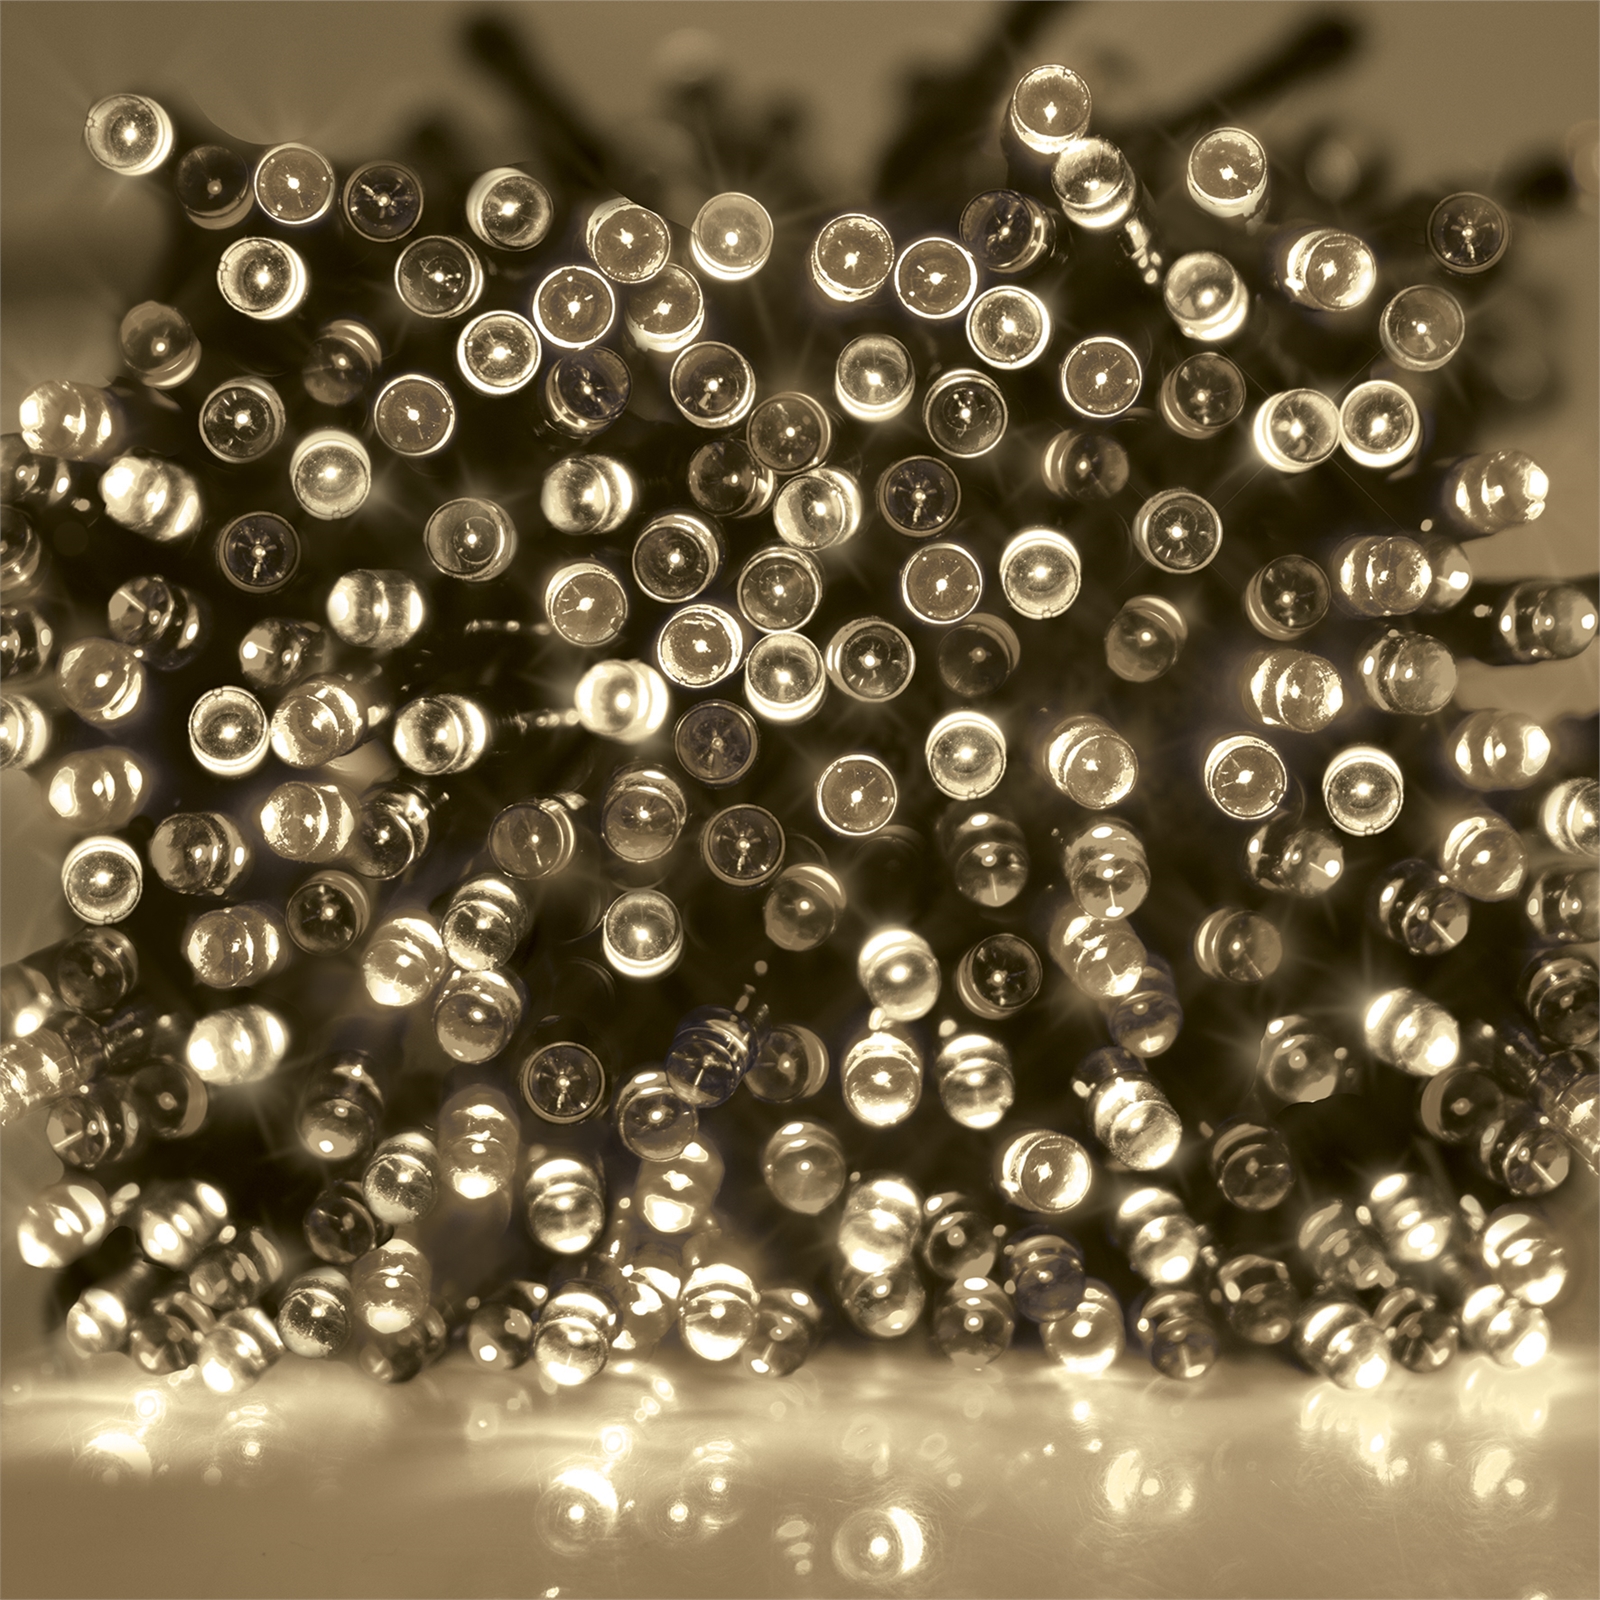 Click 300 LED Warm White Festive Fairy Lights